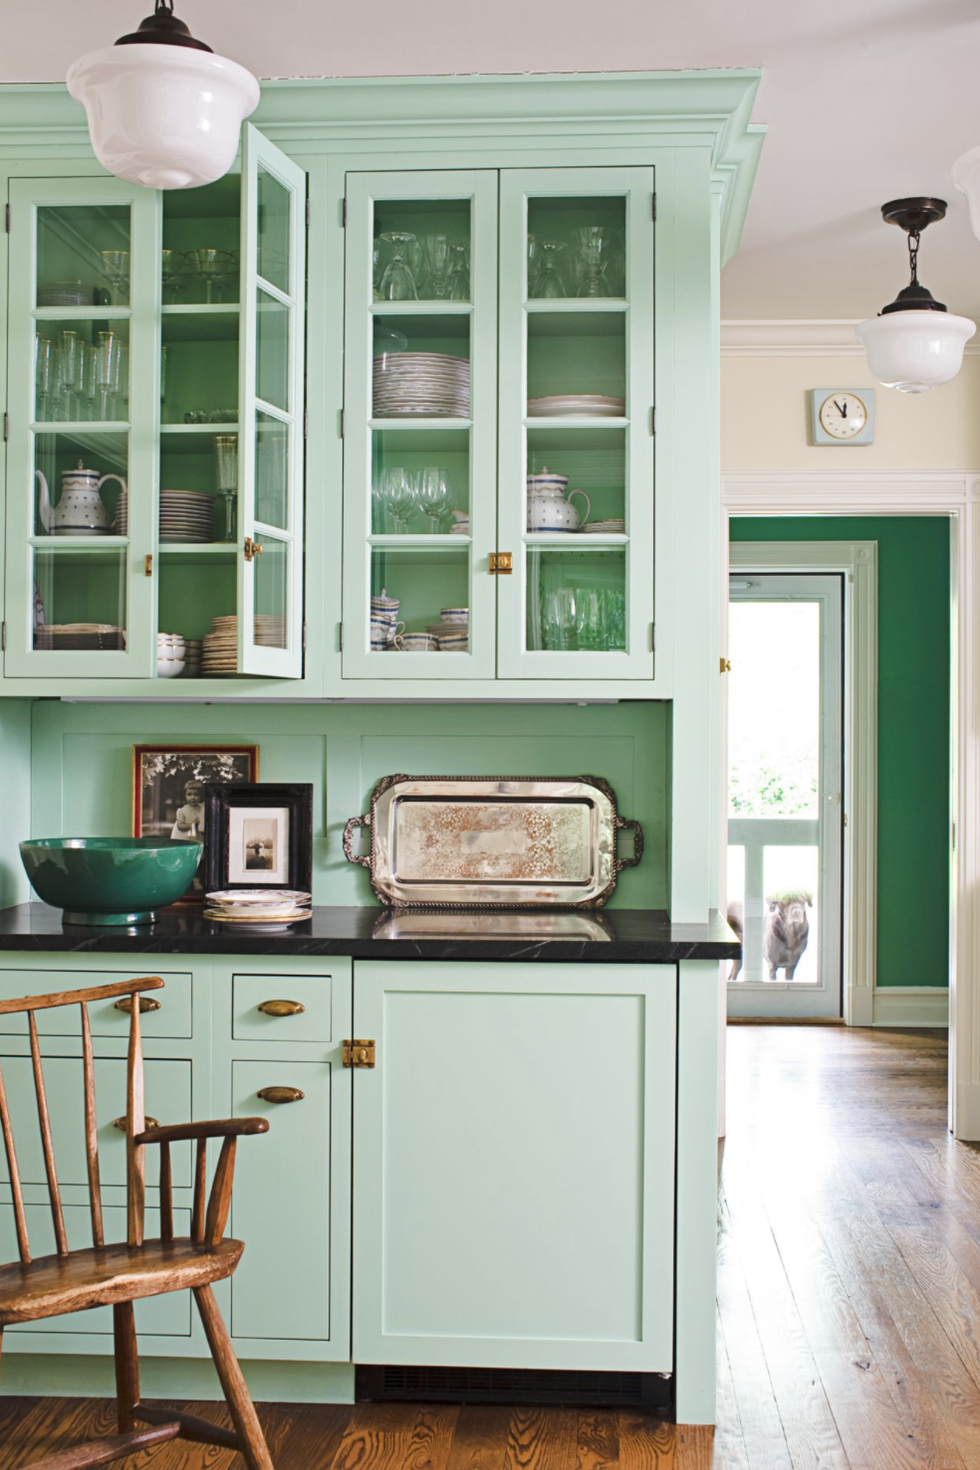 retro kitchens ideas mint green furniture